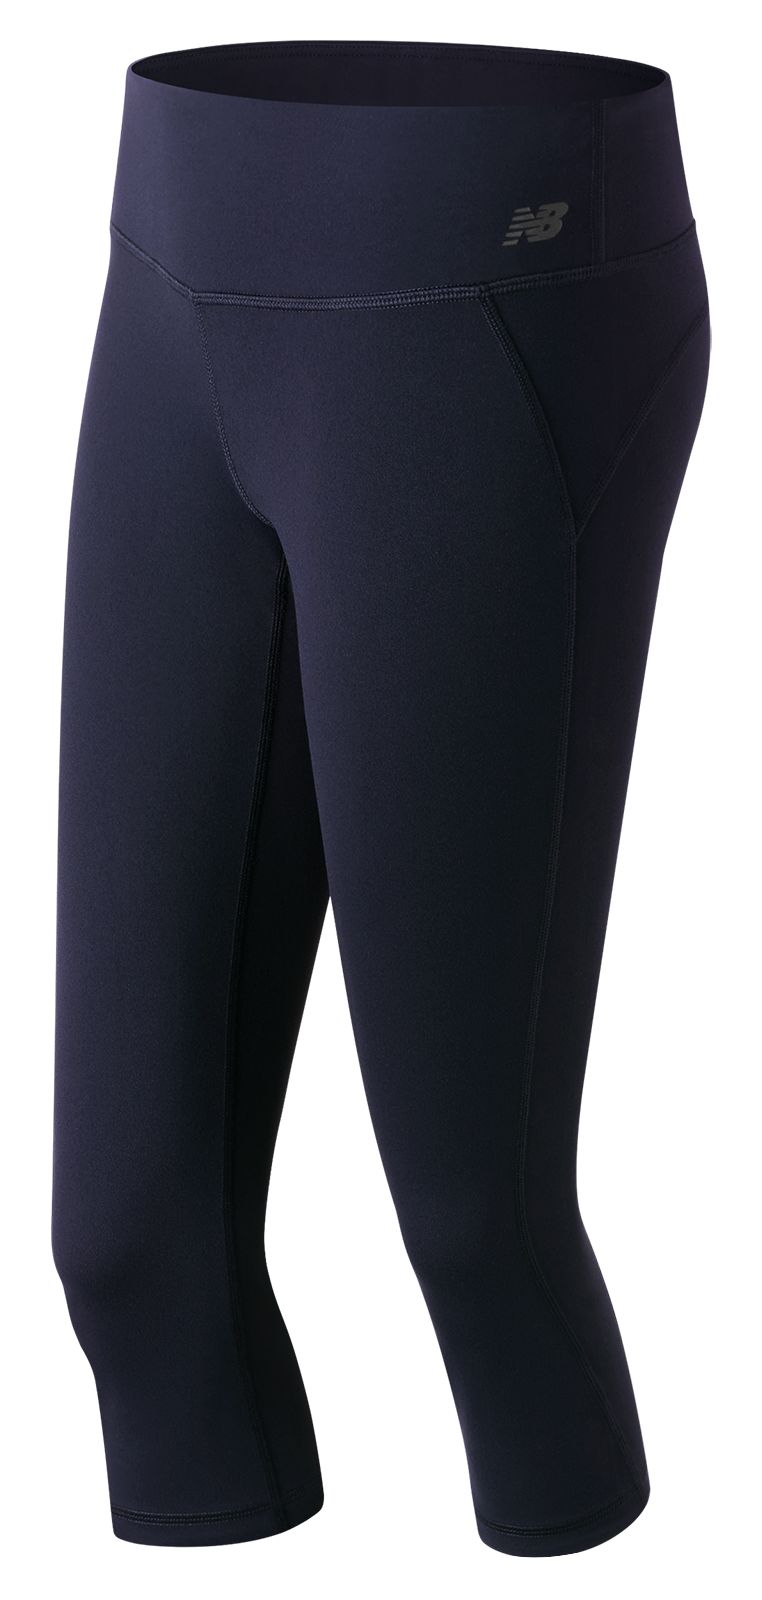 Premium Performance Capri - Women's 53117 - Pants, Fitness - New Balance